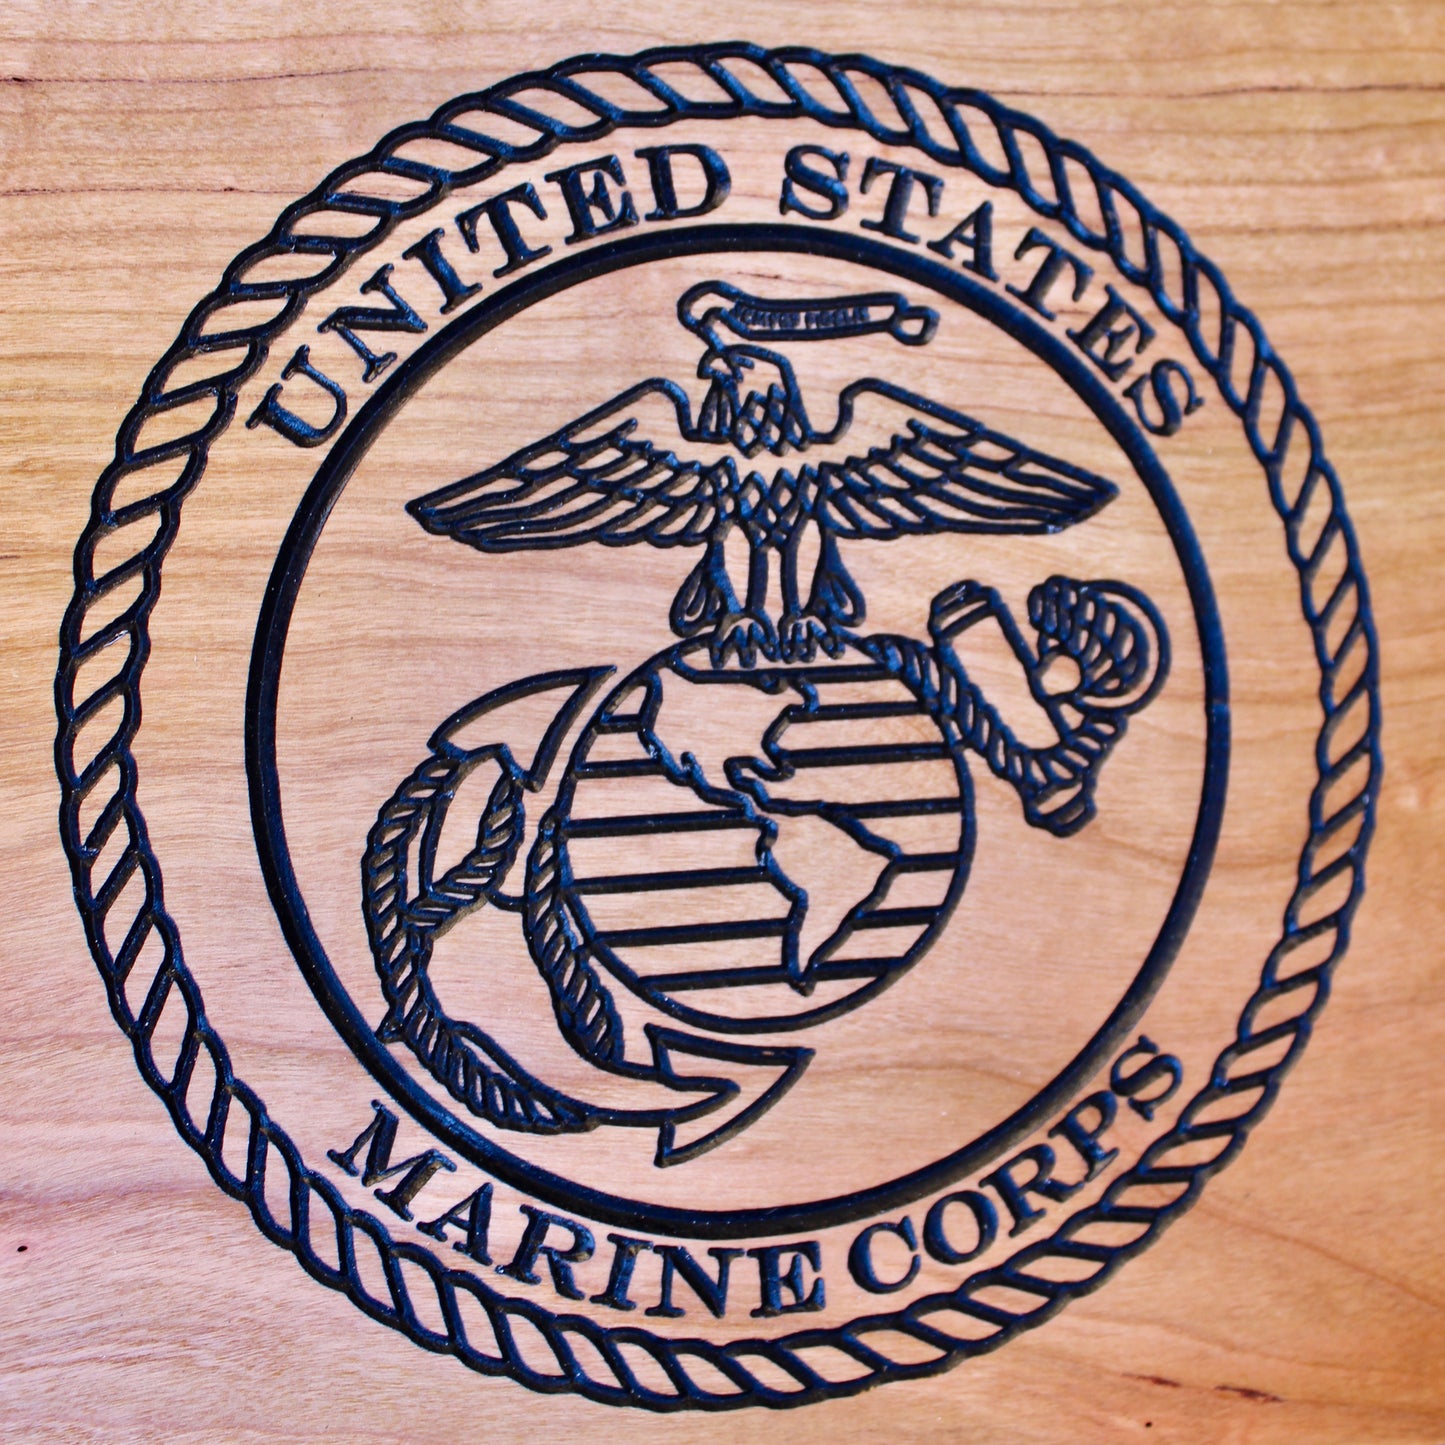 US Marine corps box